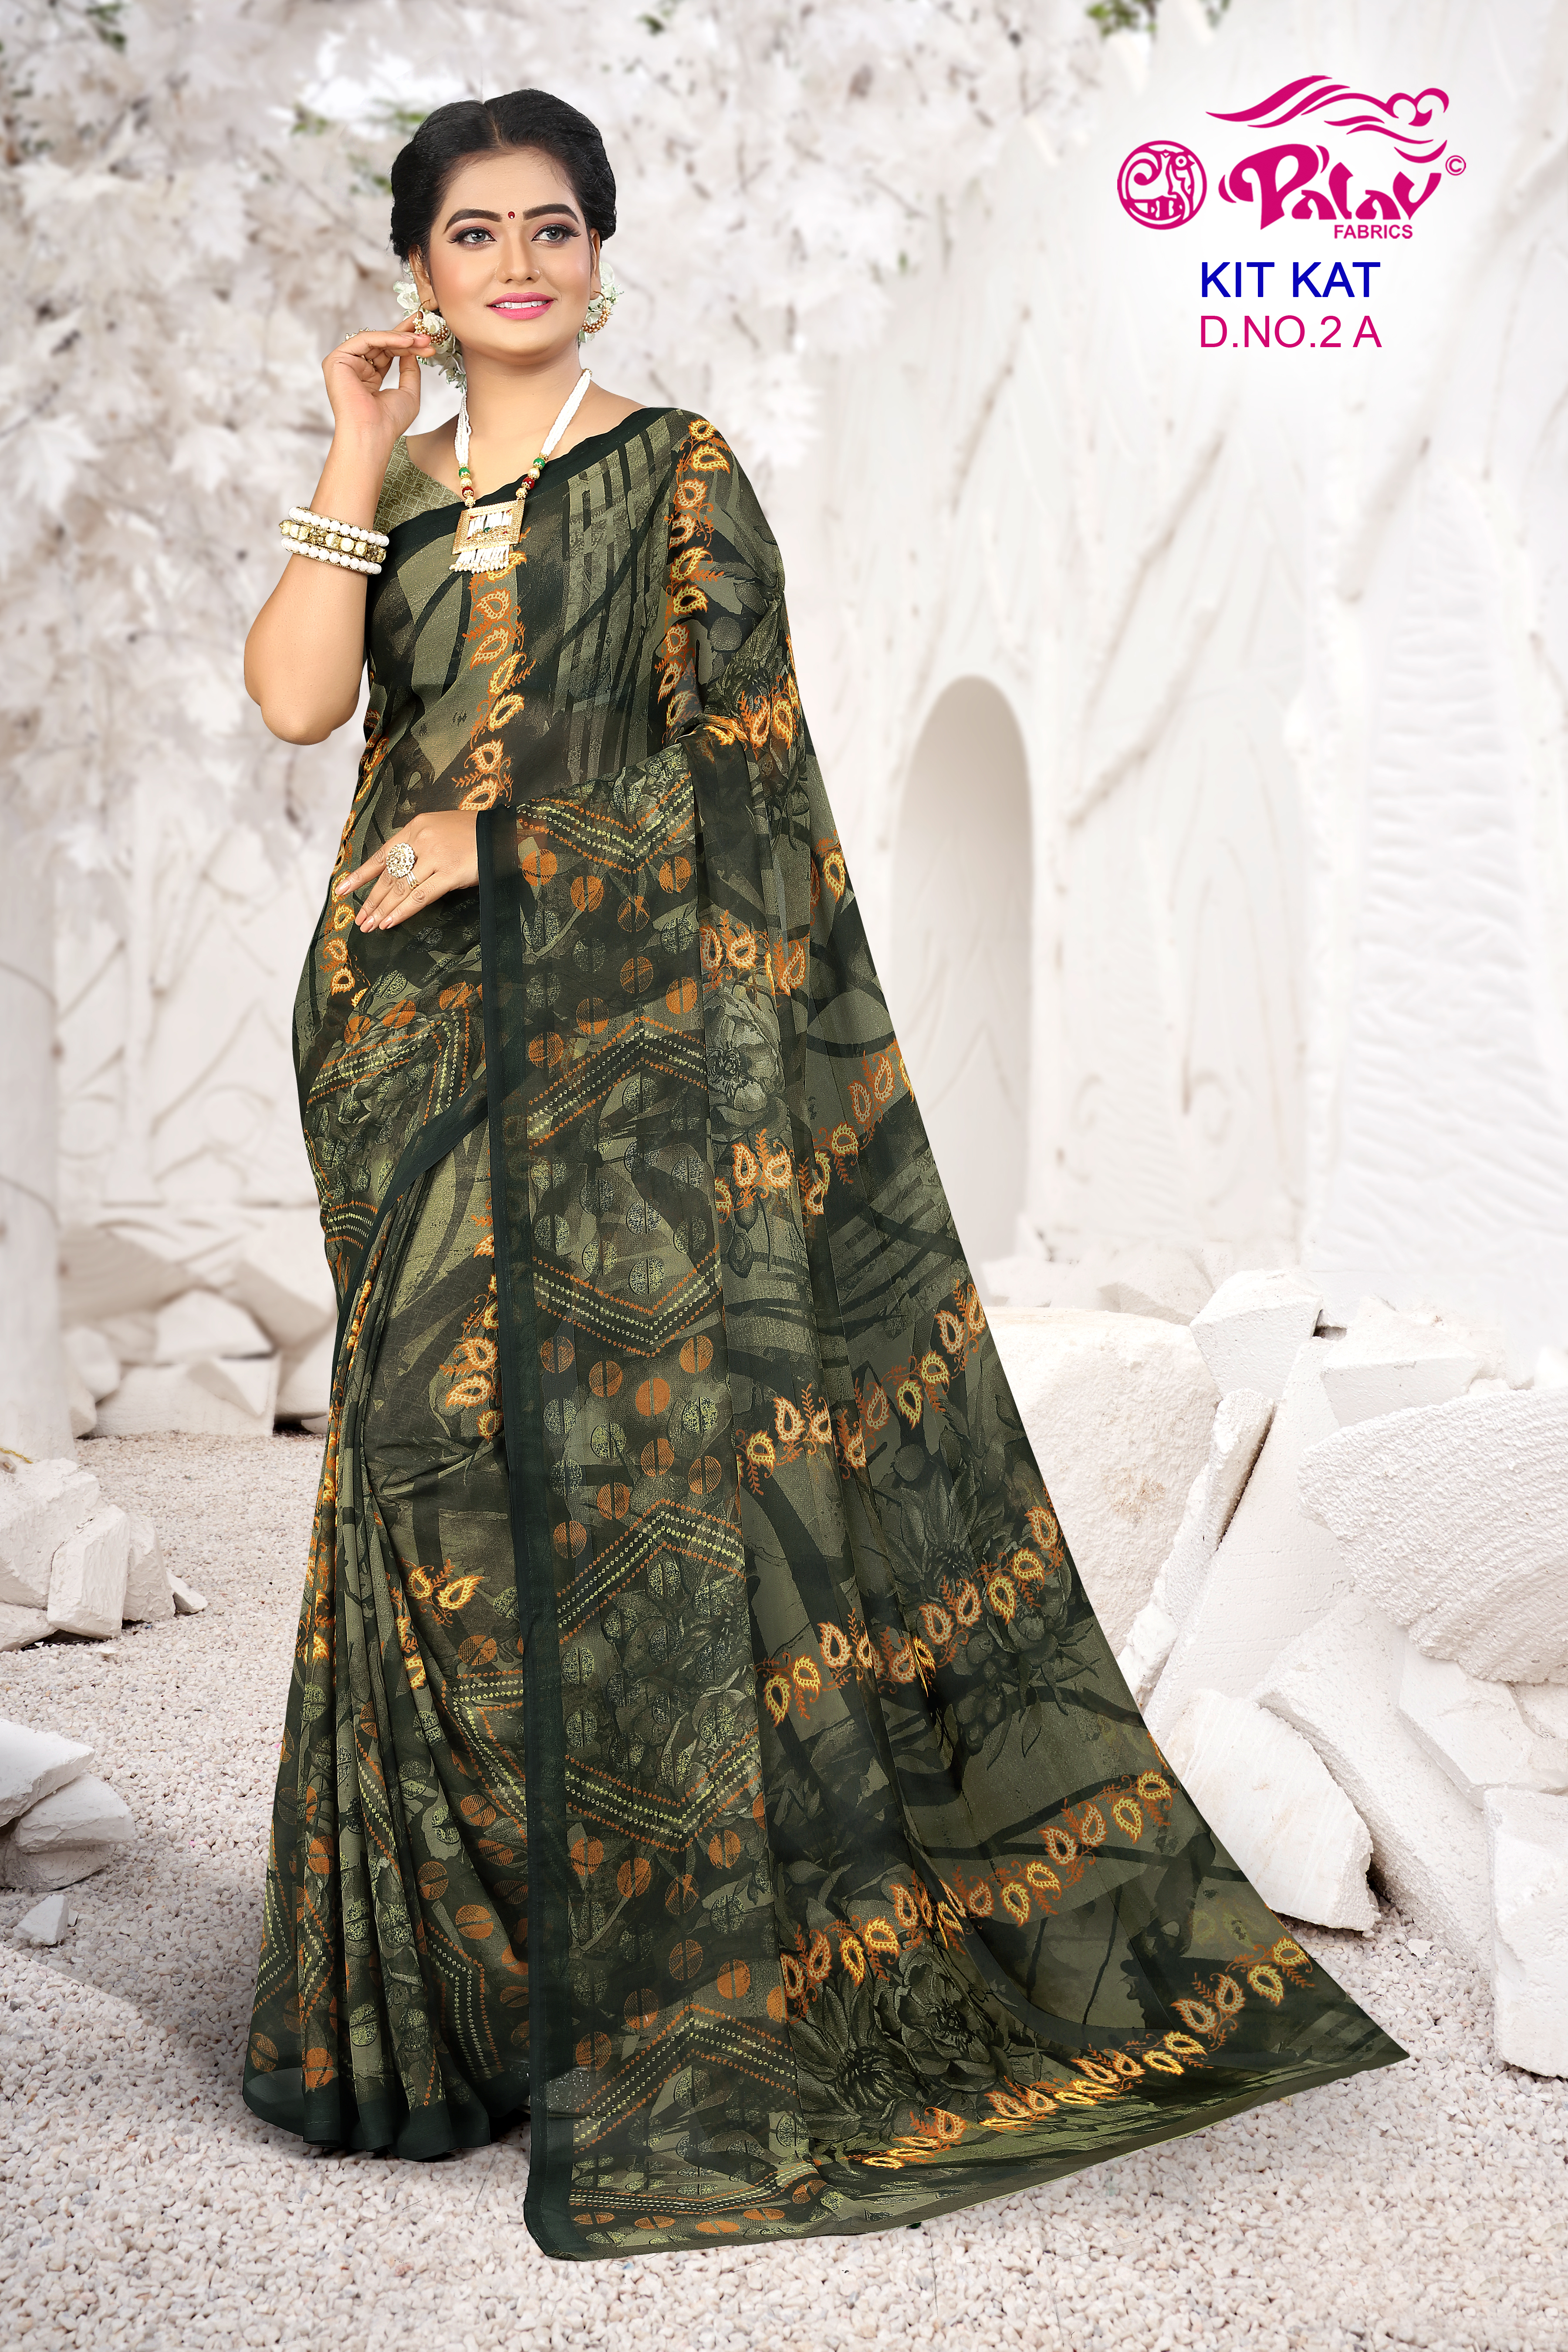 Kit kat Gergette printed saree by palav fabrics